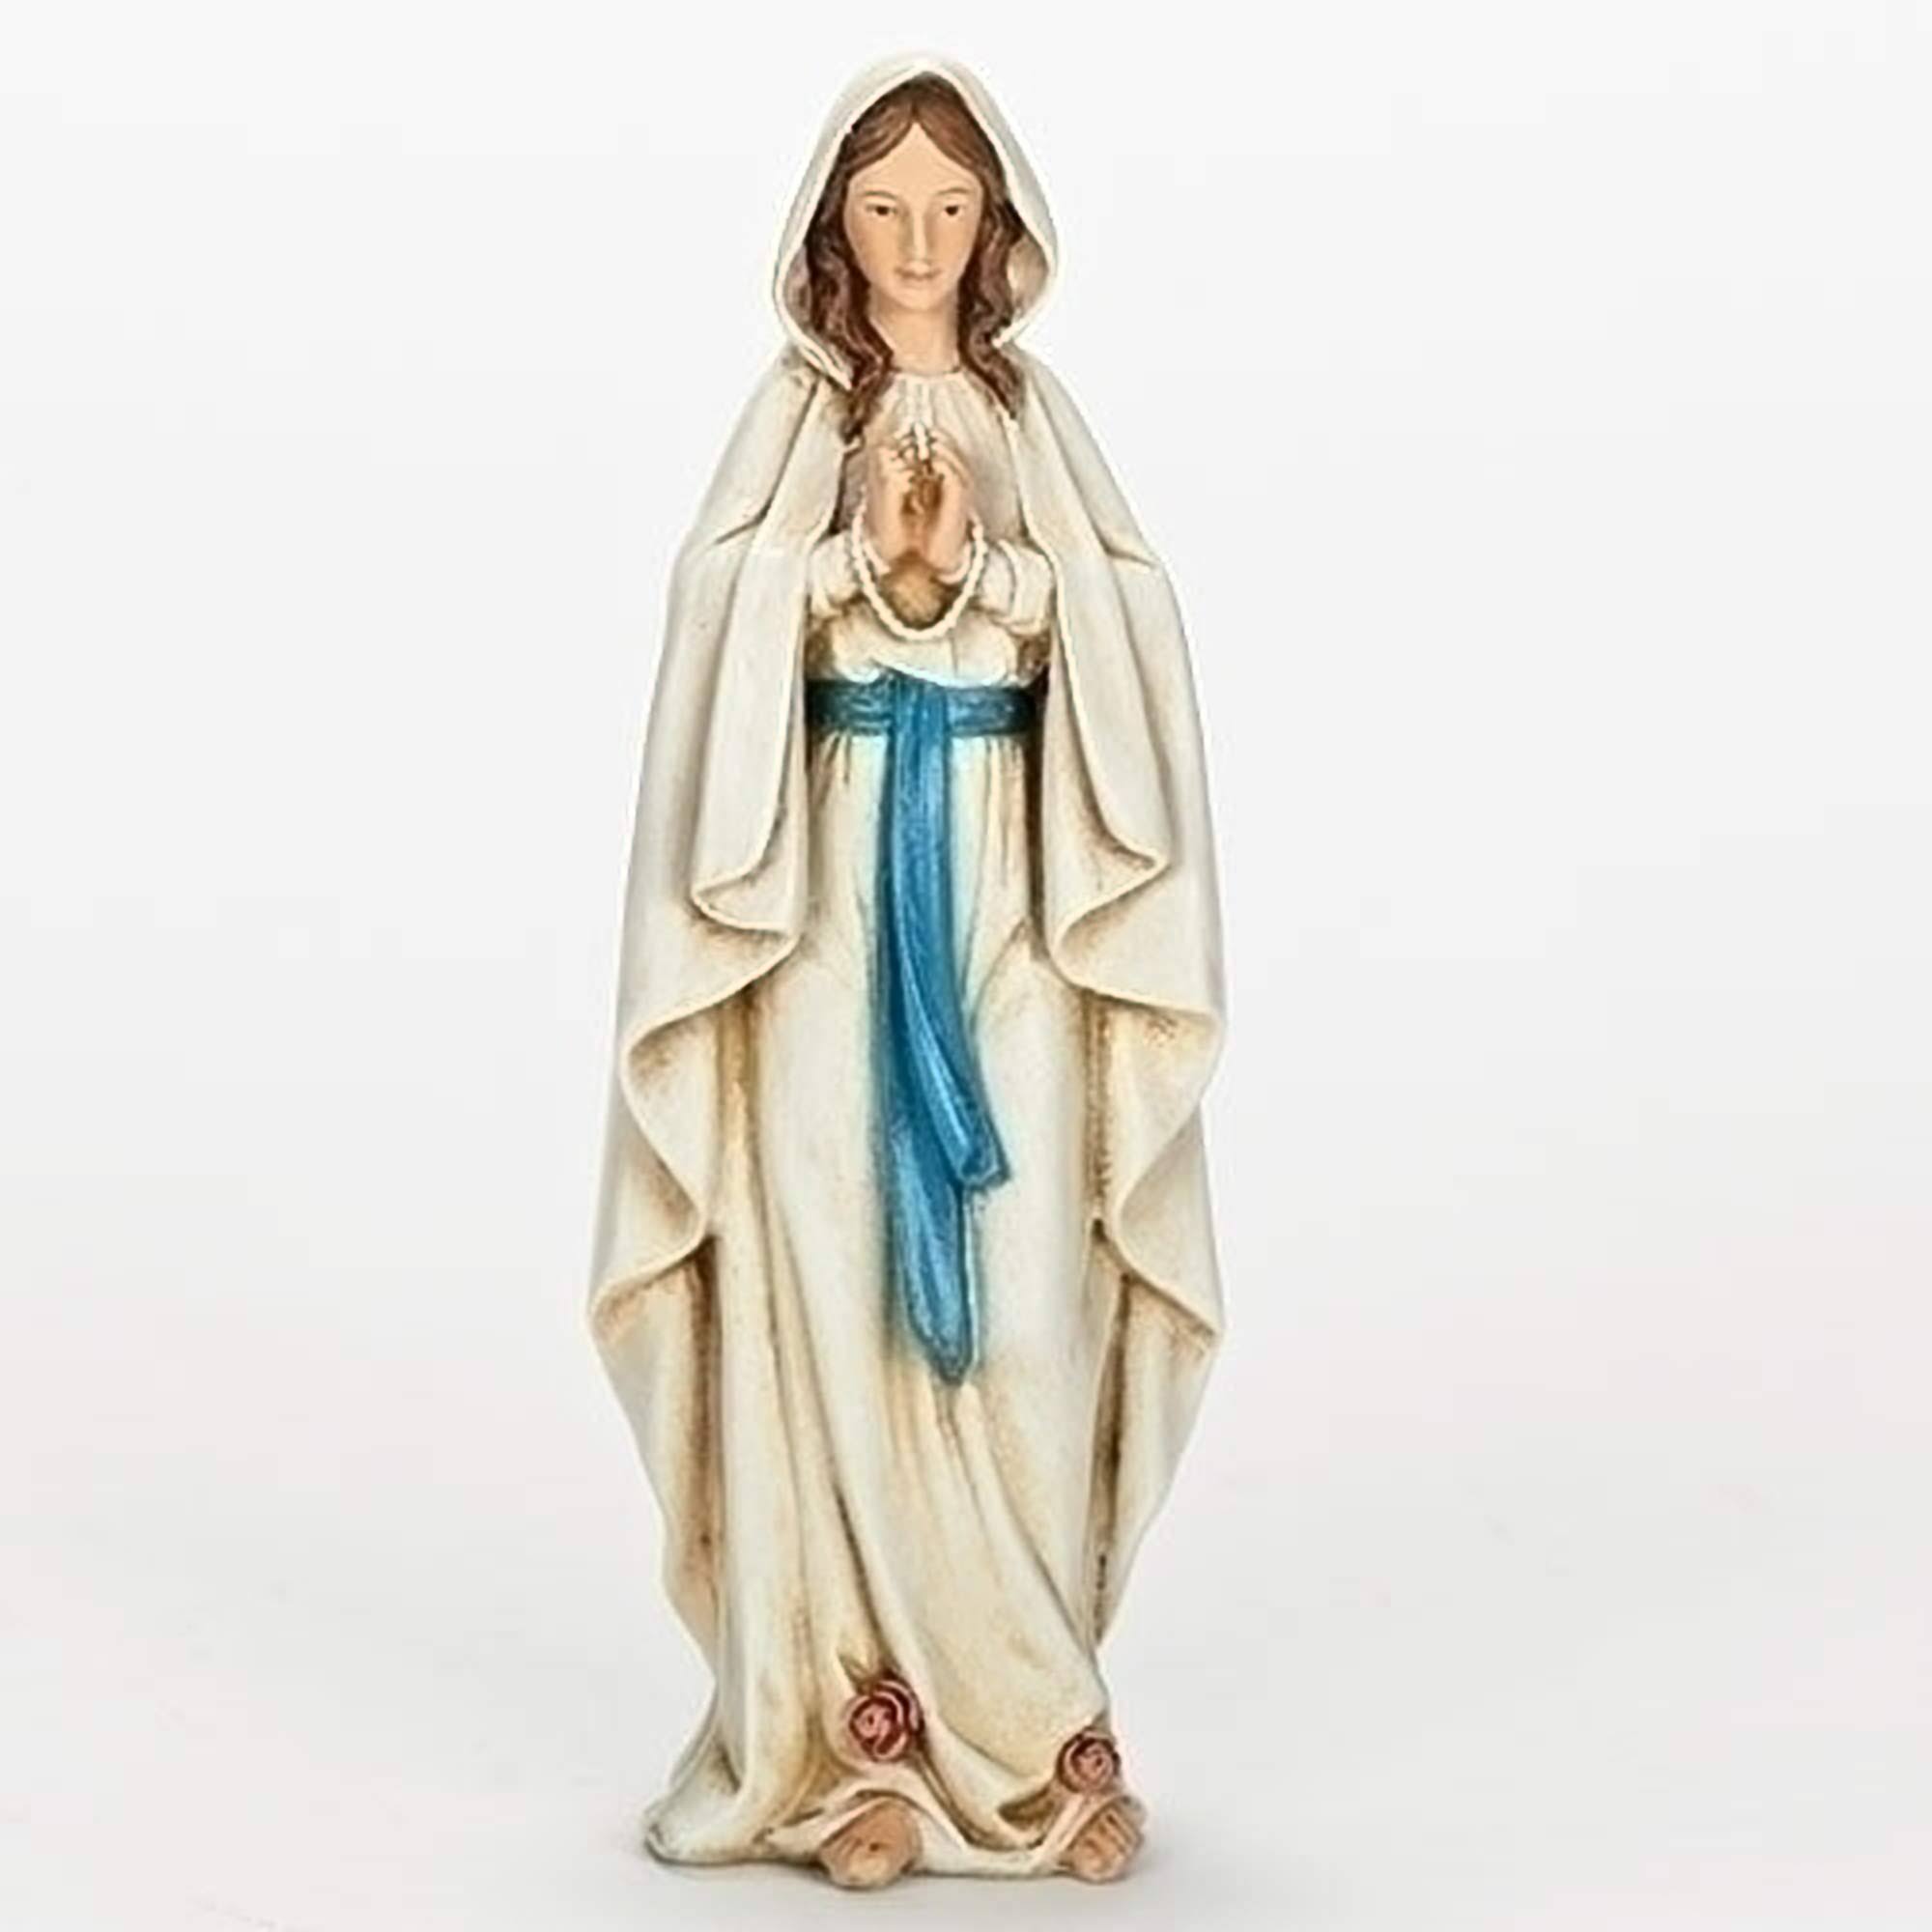 Joseph Studio Our Lady of Lourdes Virgin Mary Religious Renaissance Figurine